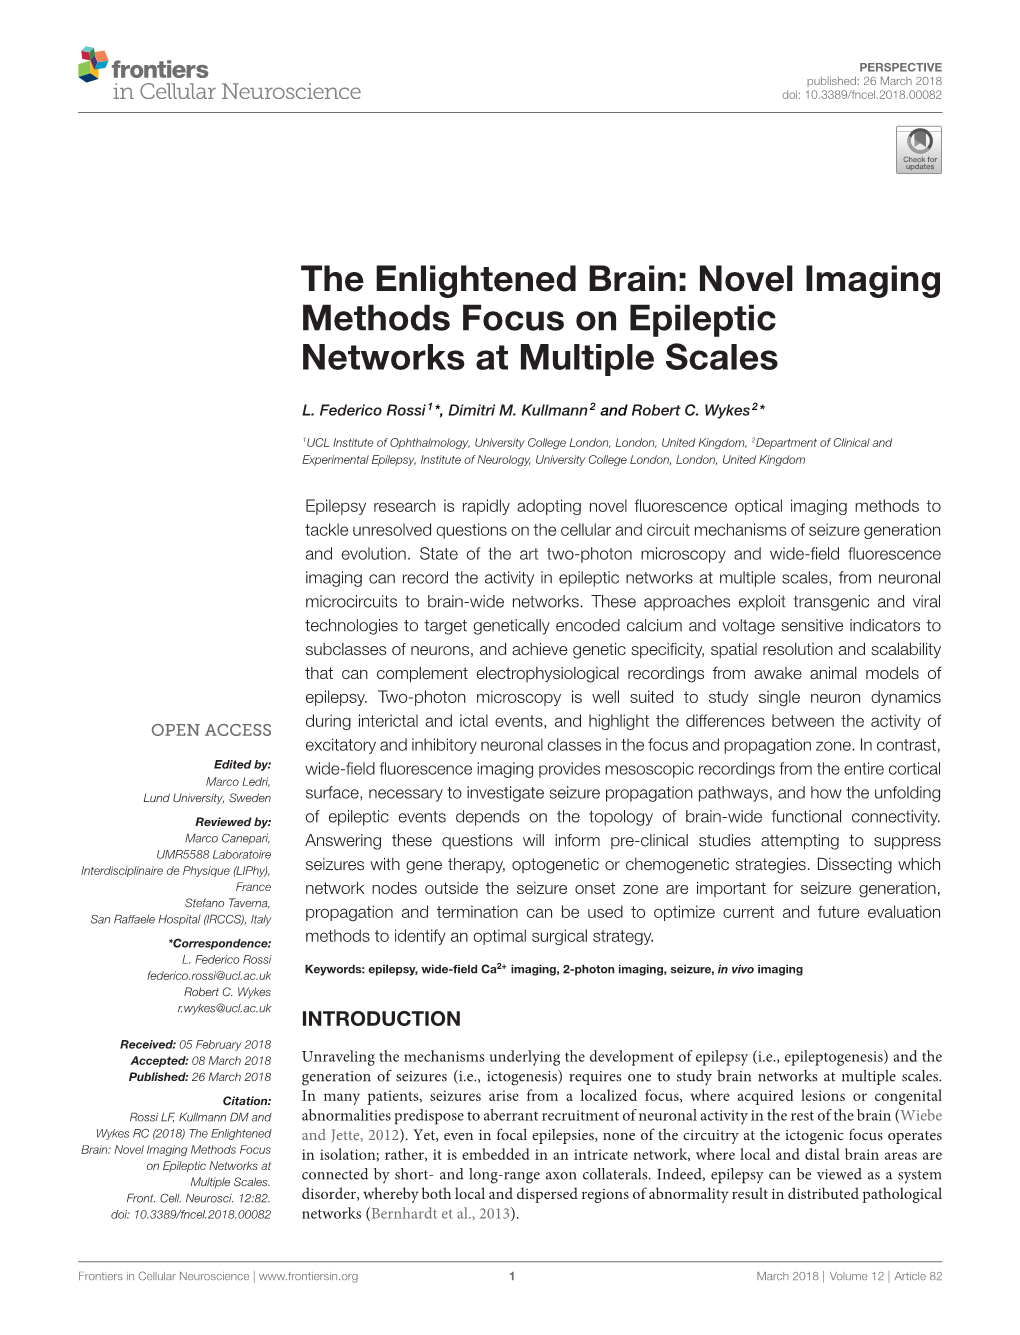 The Enlightened Brain: Novel Imaging Methods Focus on Epileptic Networks at Multiple Scales